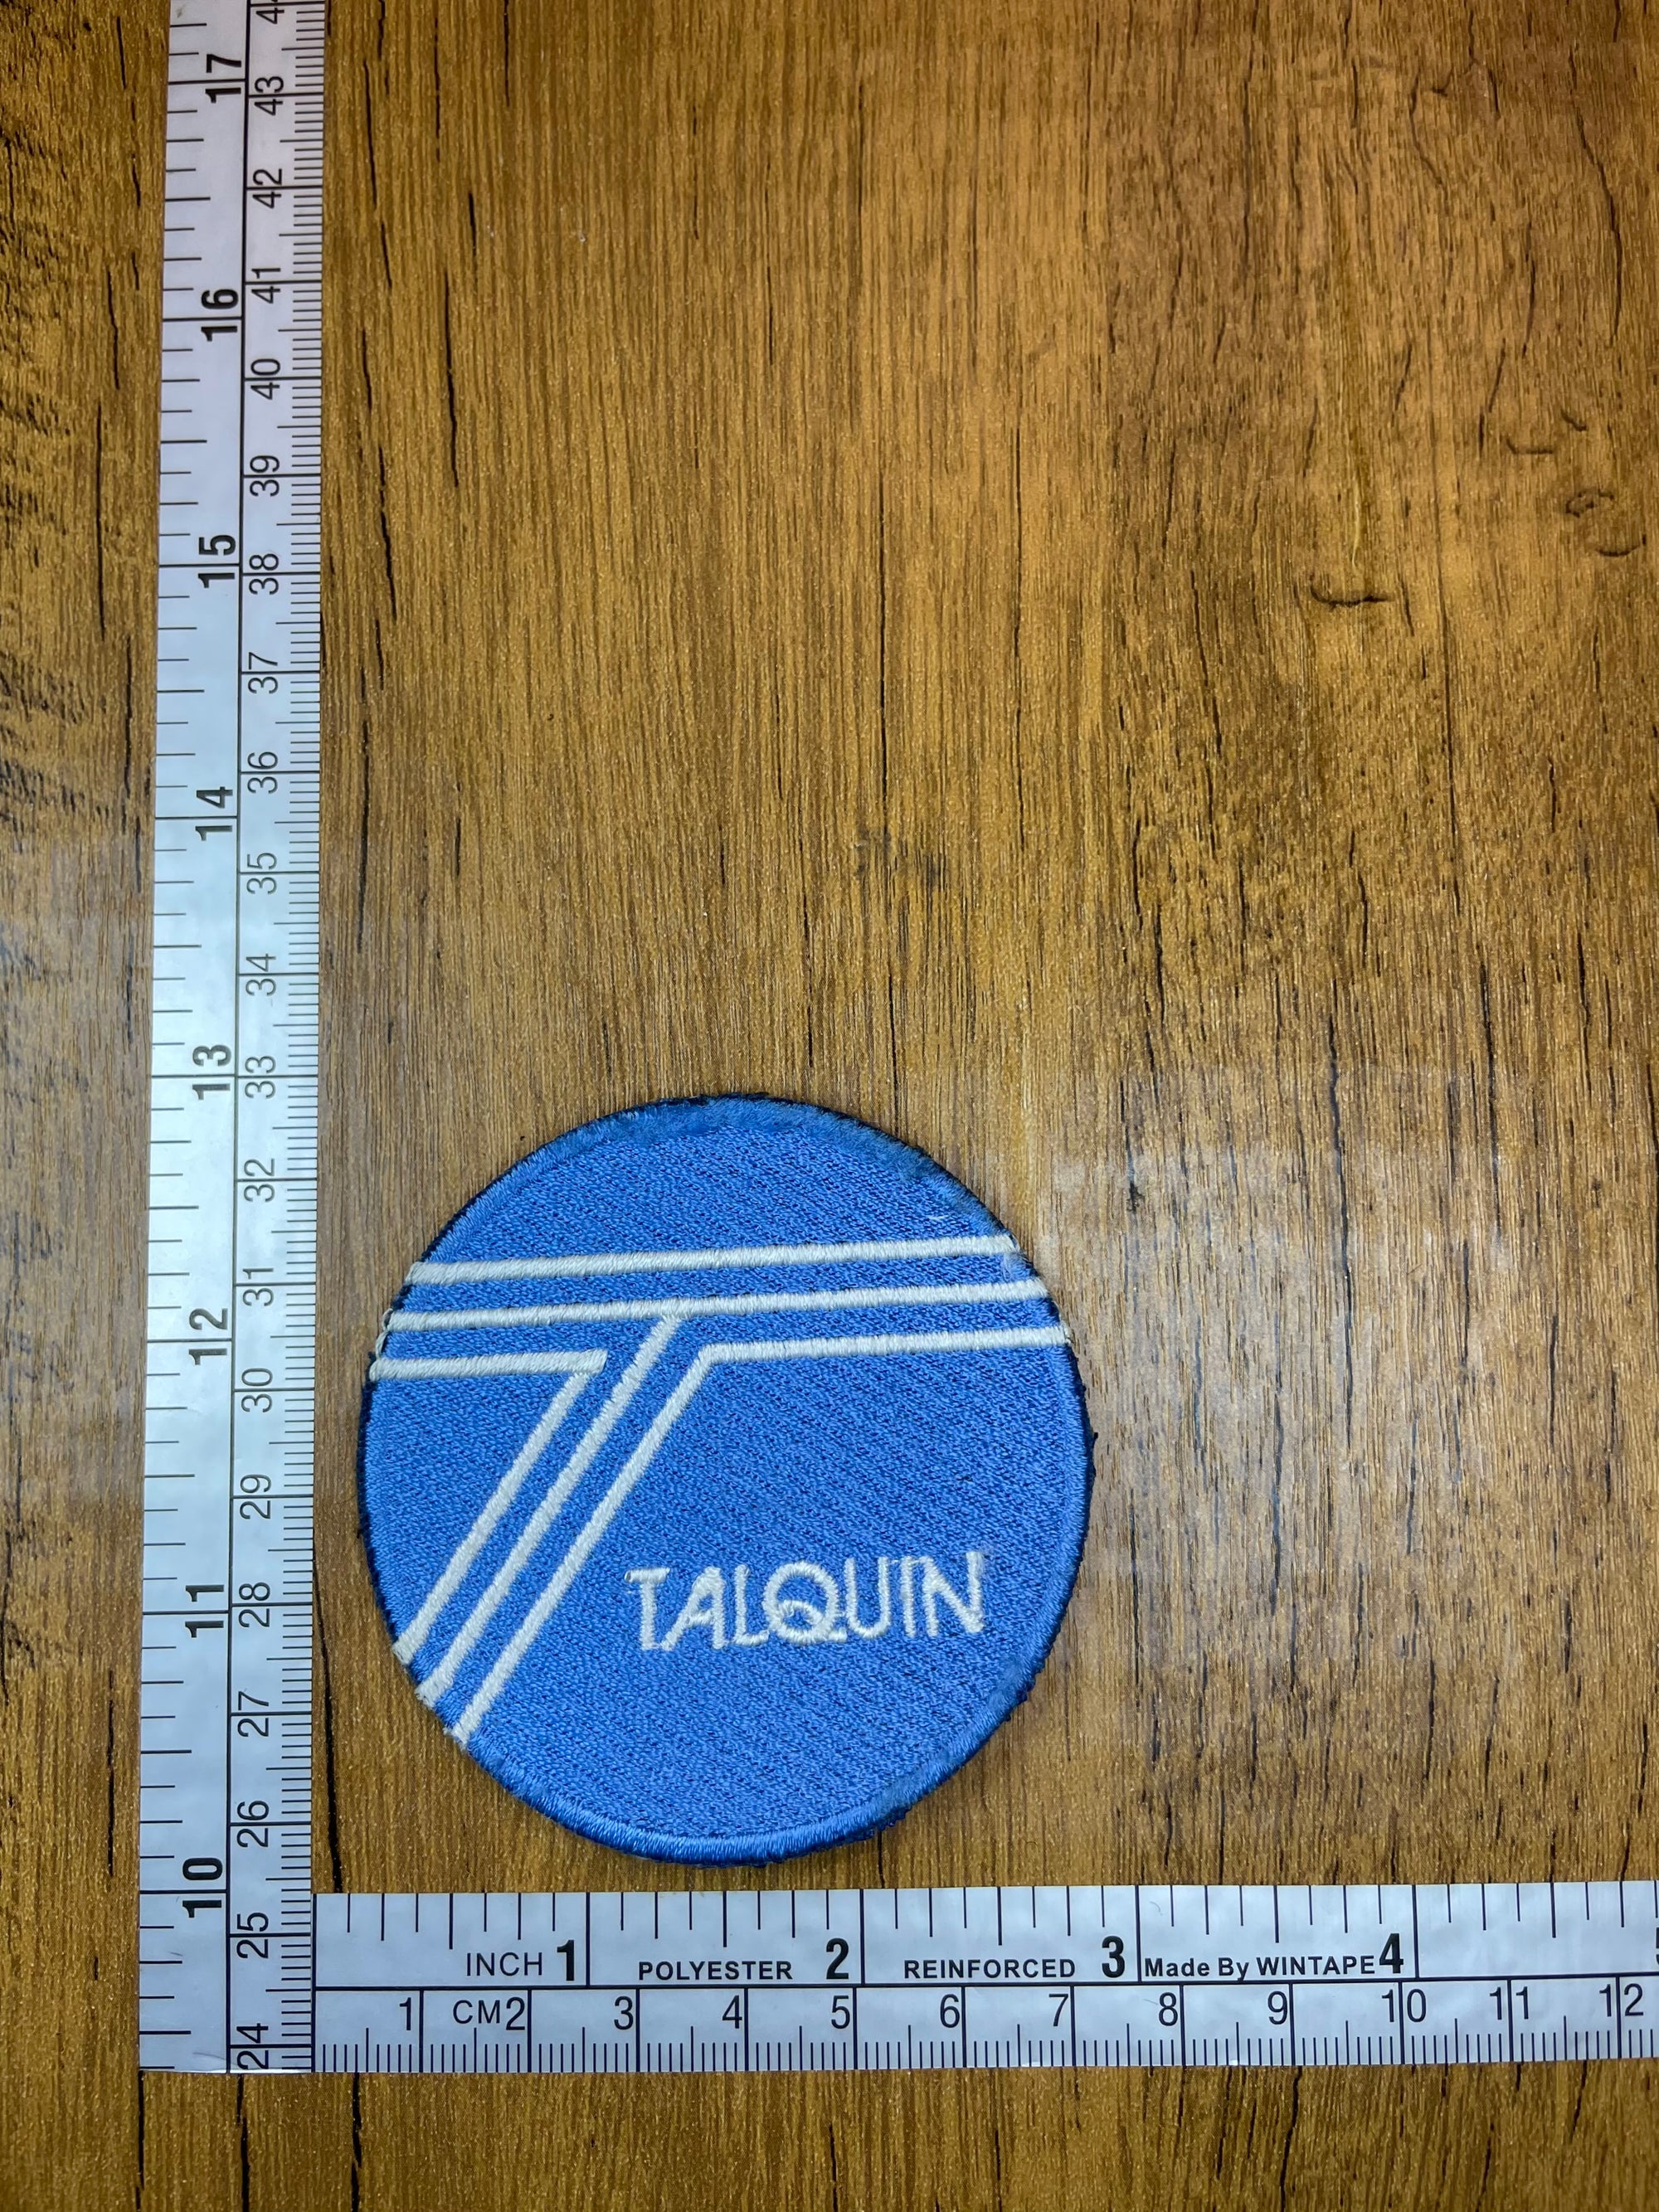 Vintage Talquin